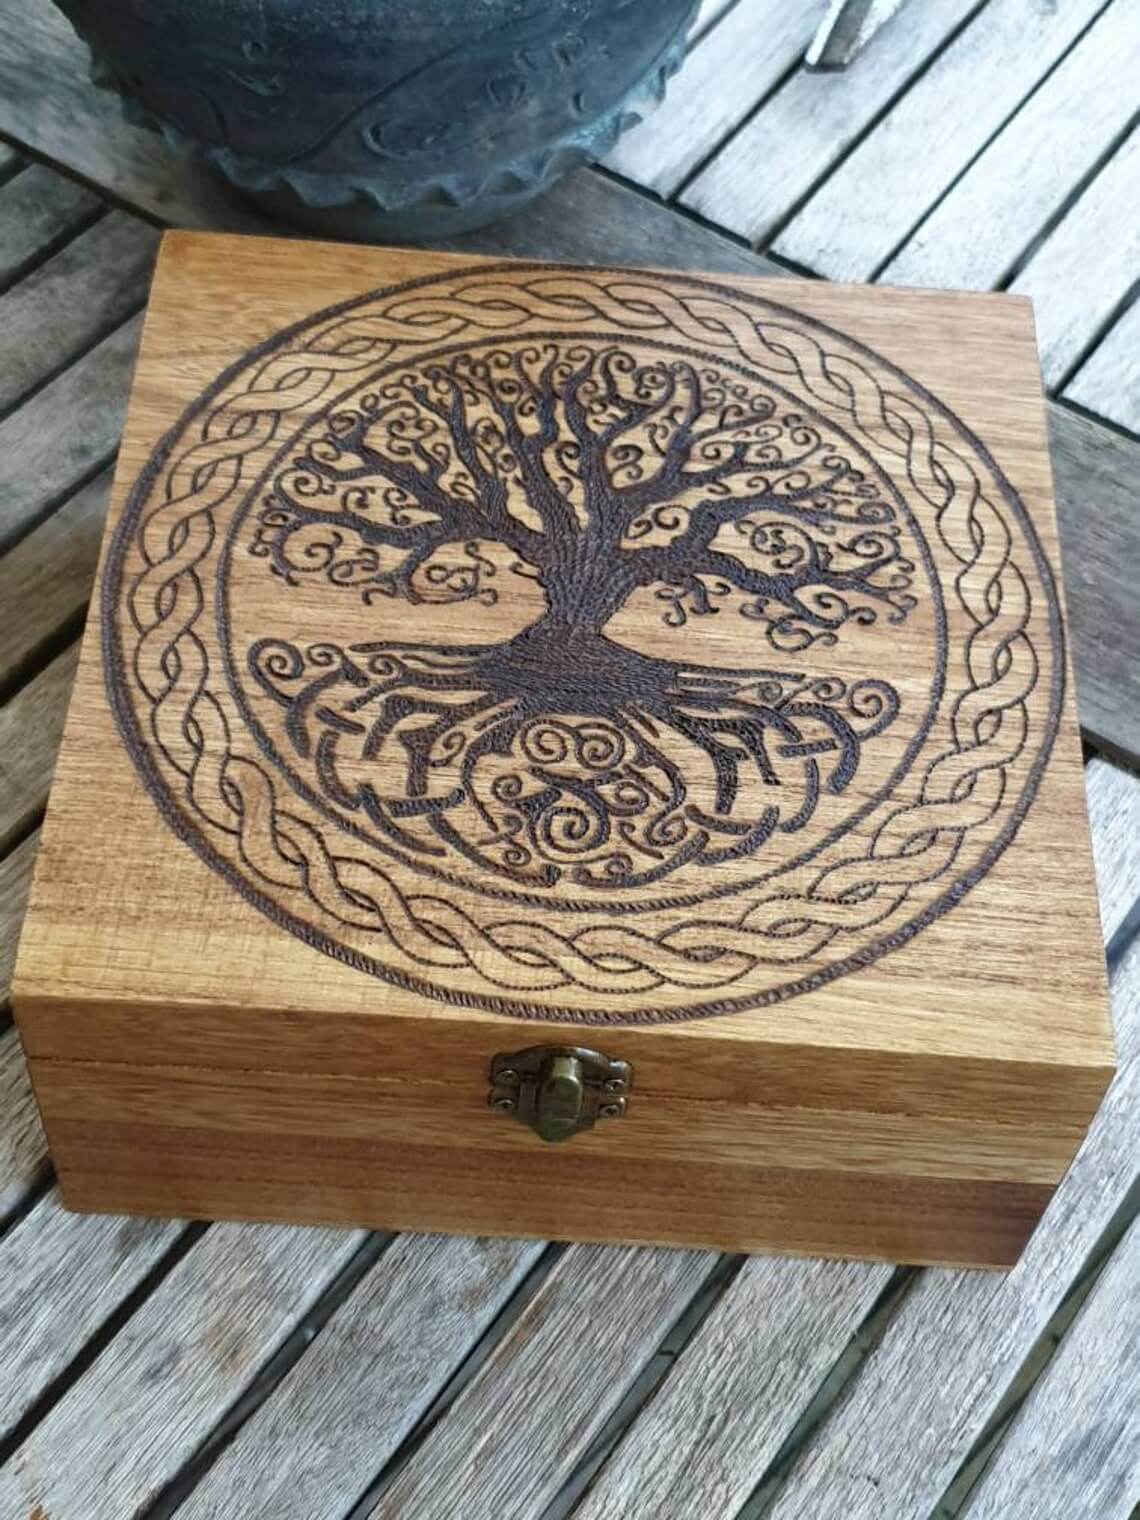 A Cool Version of a Viking Box